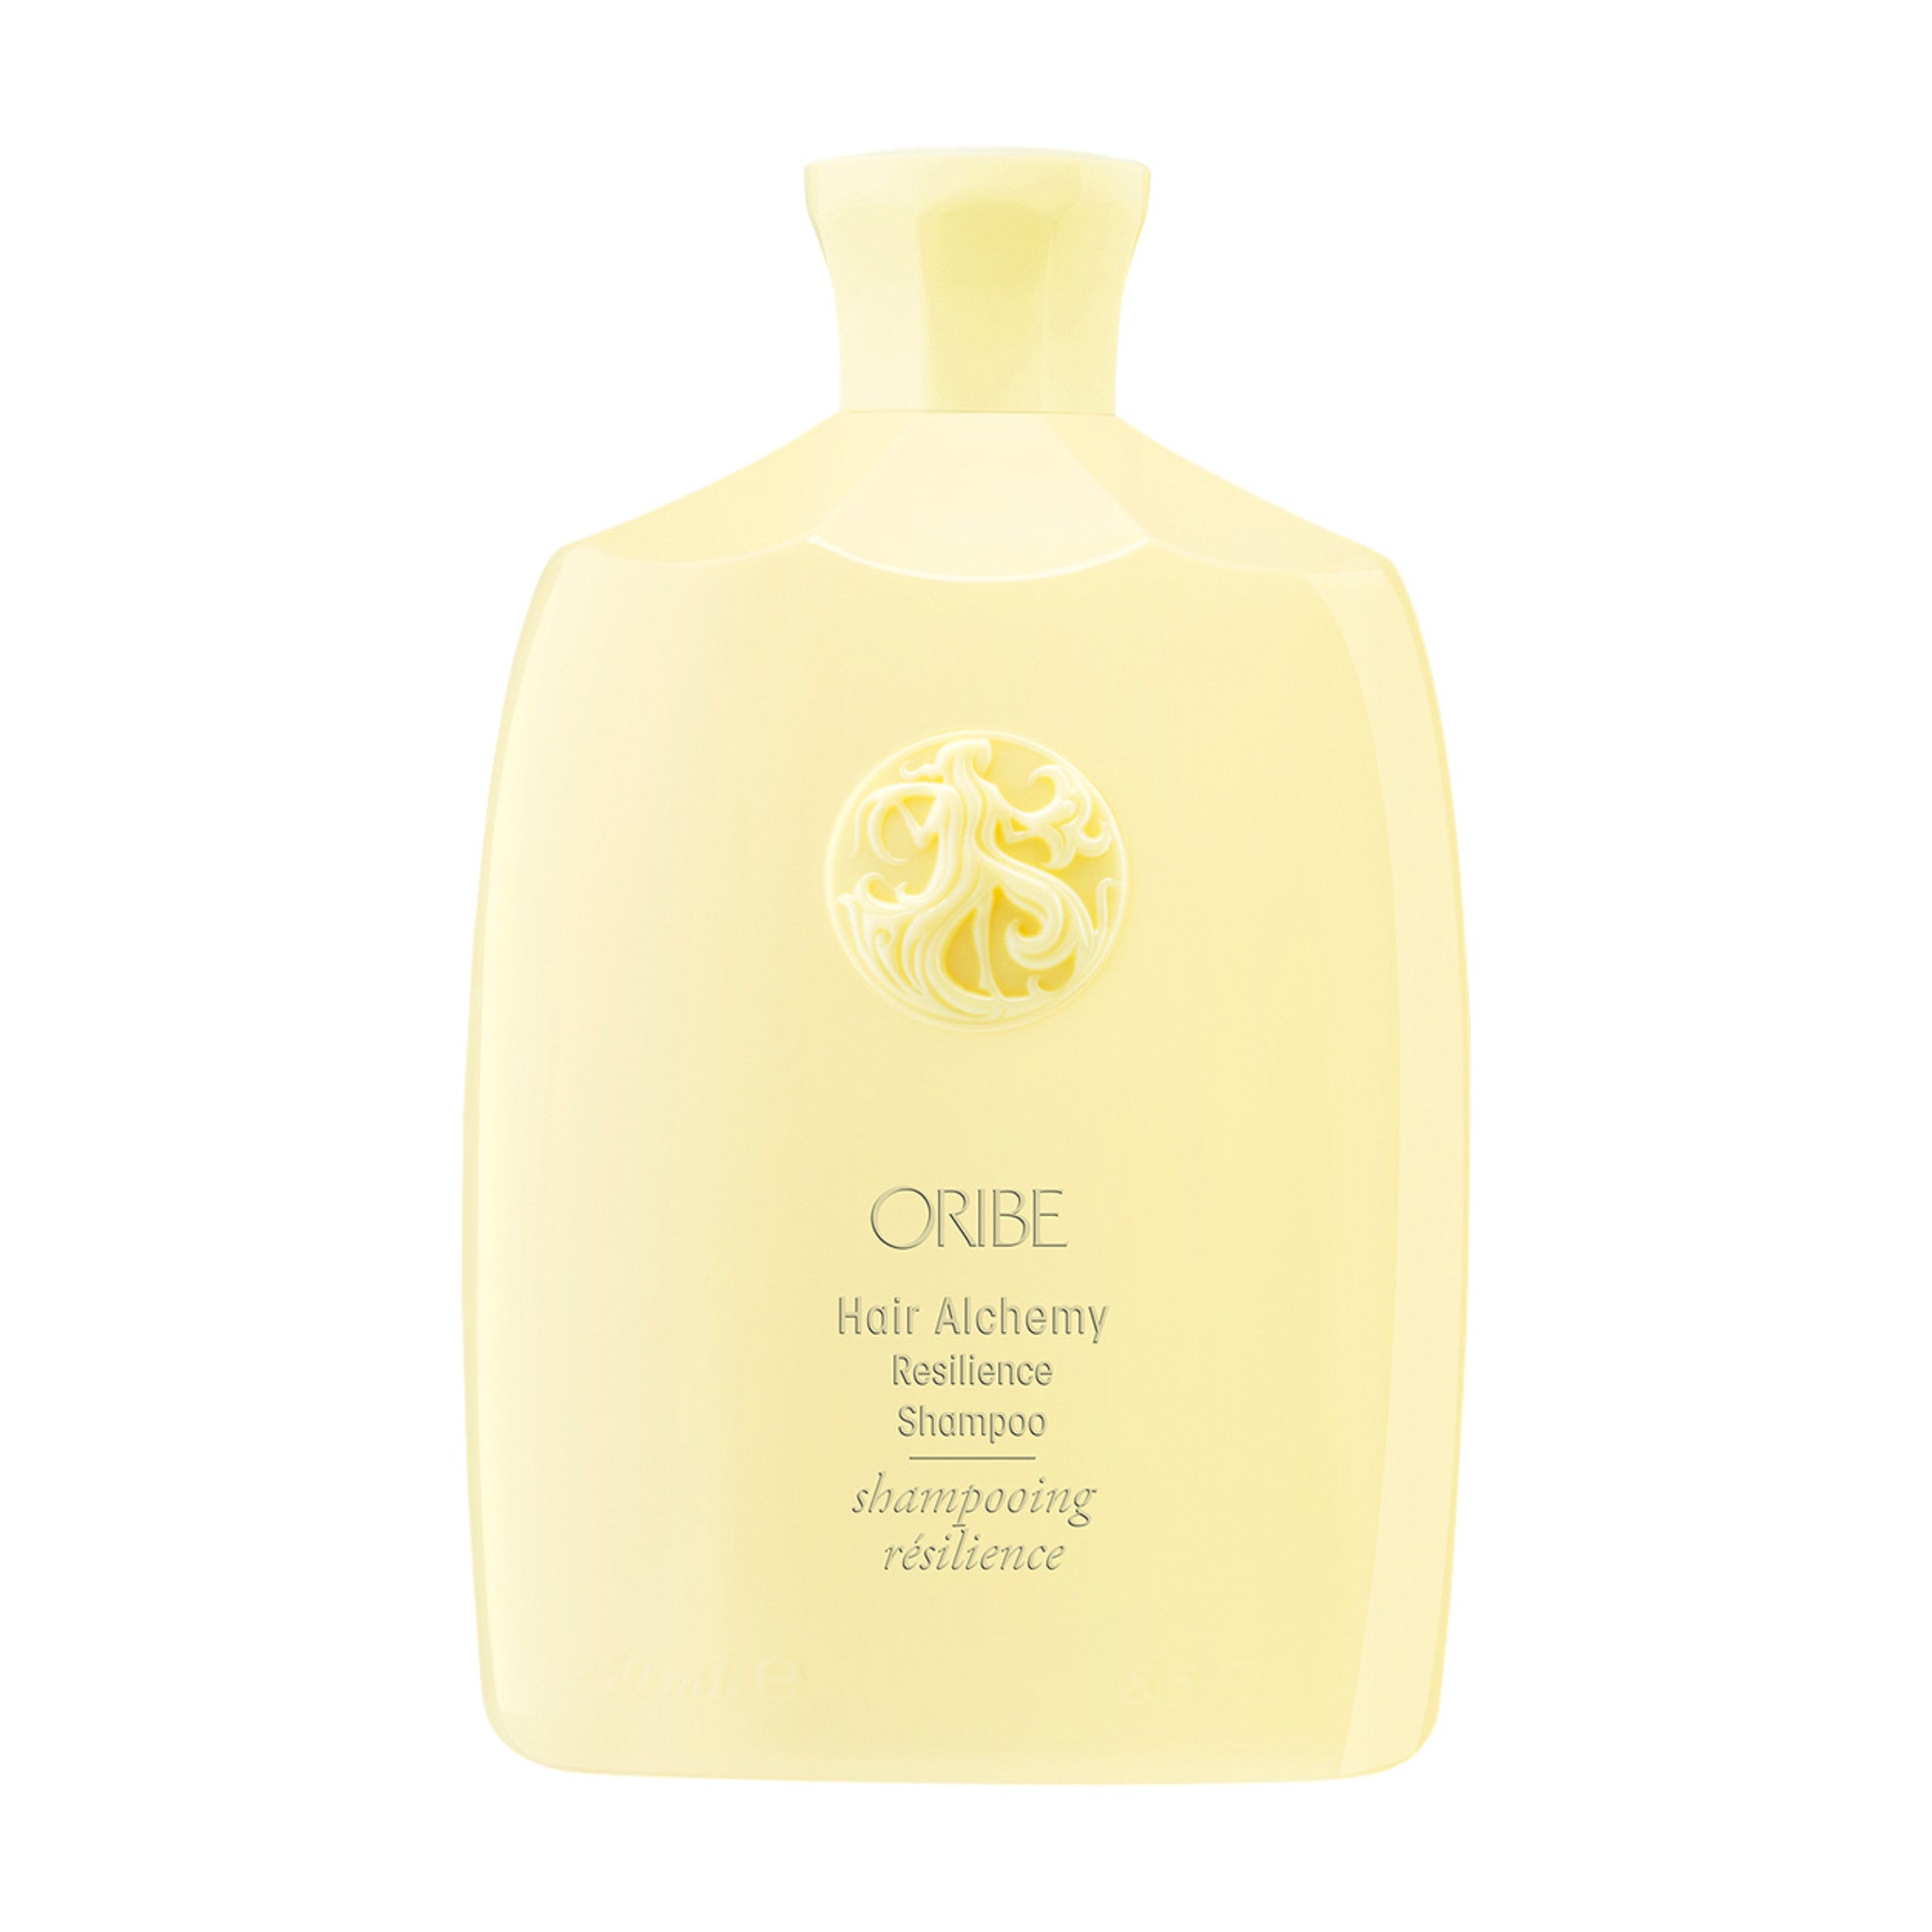 Oribe Hair Alchemy Resilience Shampoo Size variant: 8.5 fl oz | 250 ml main image.